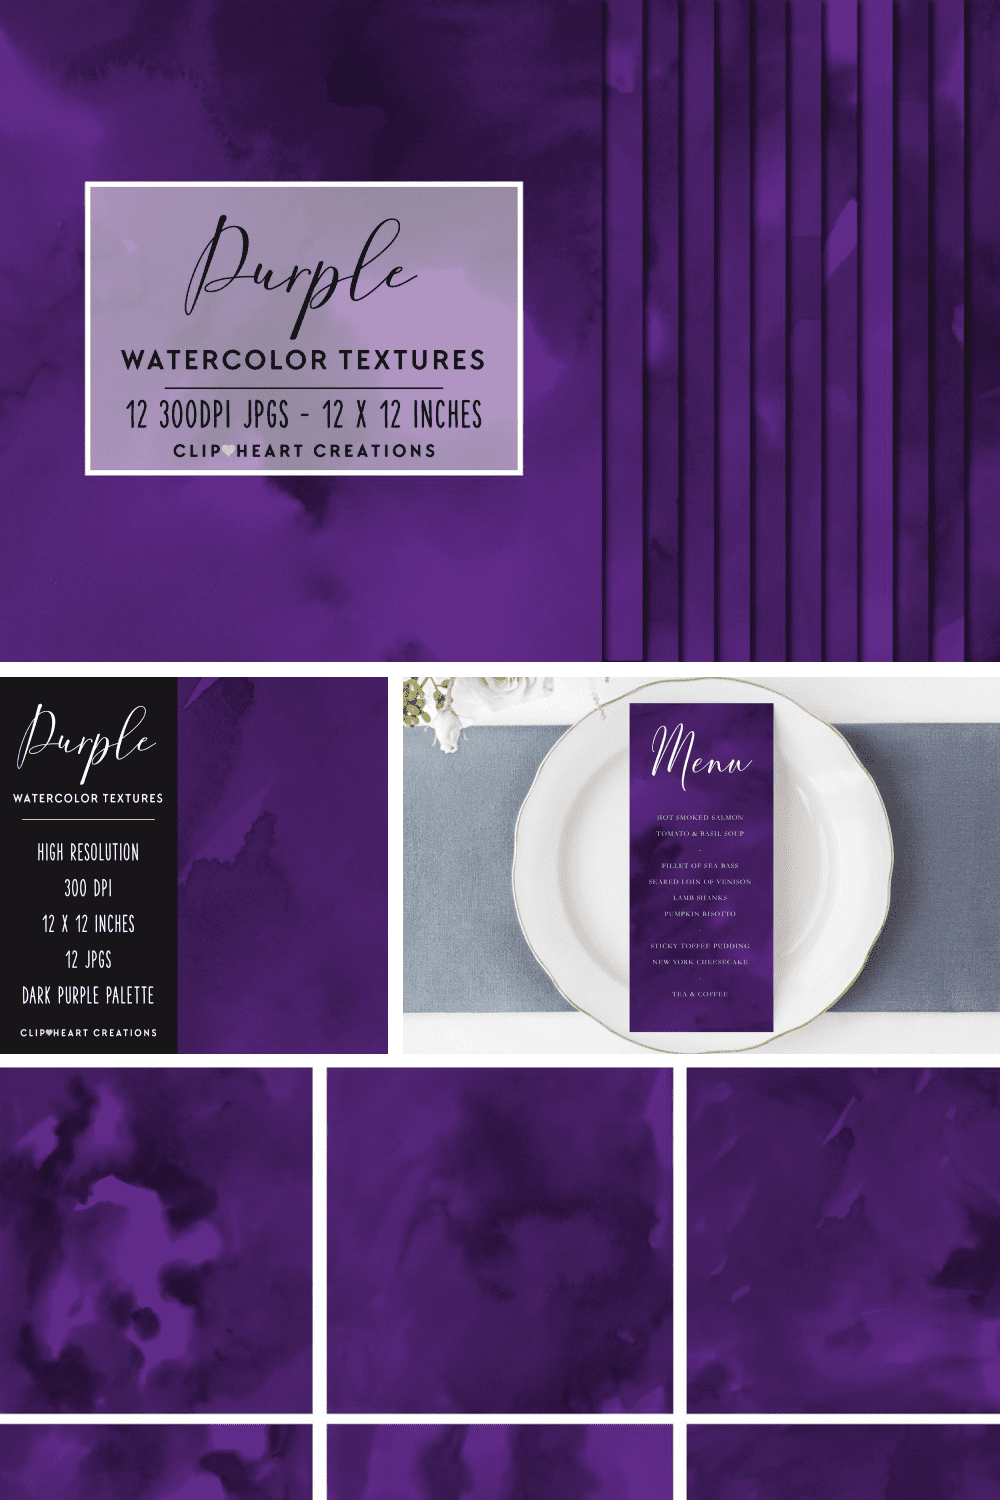 Deep purple watercolor papers.